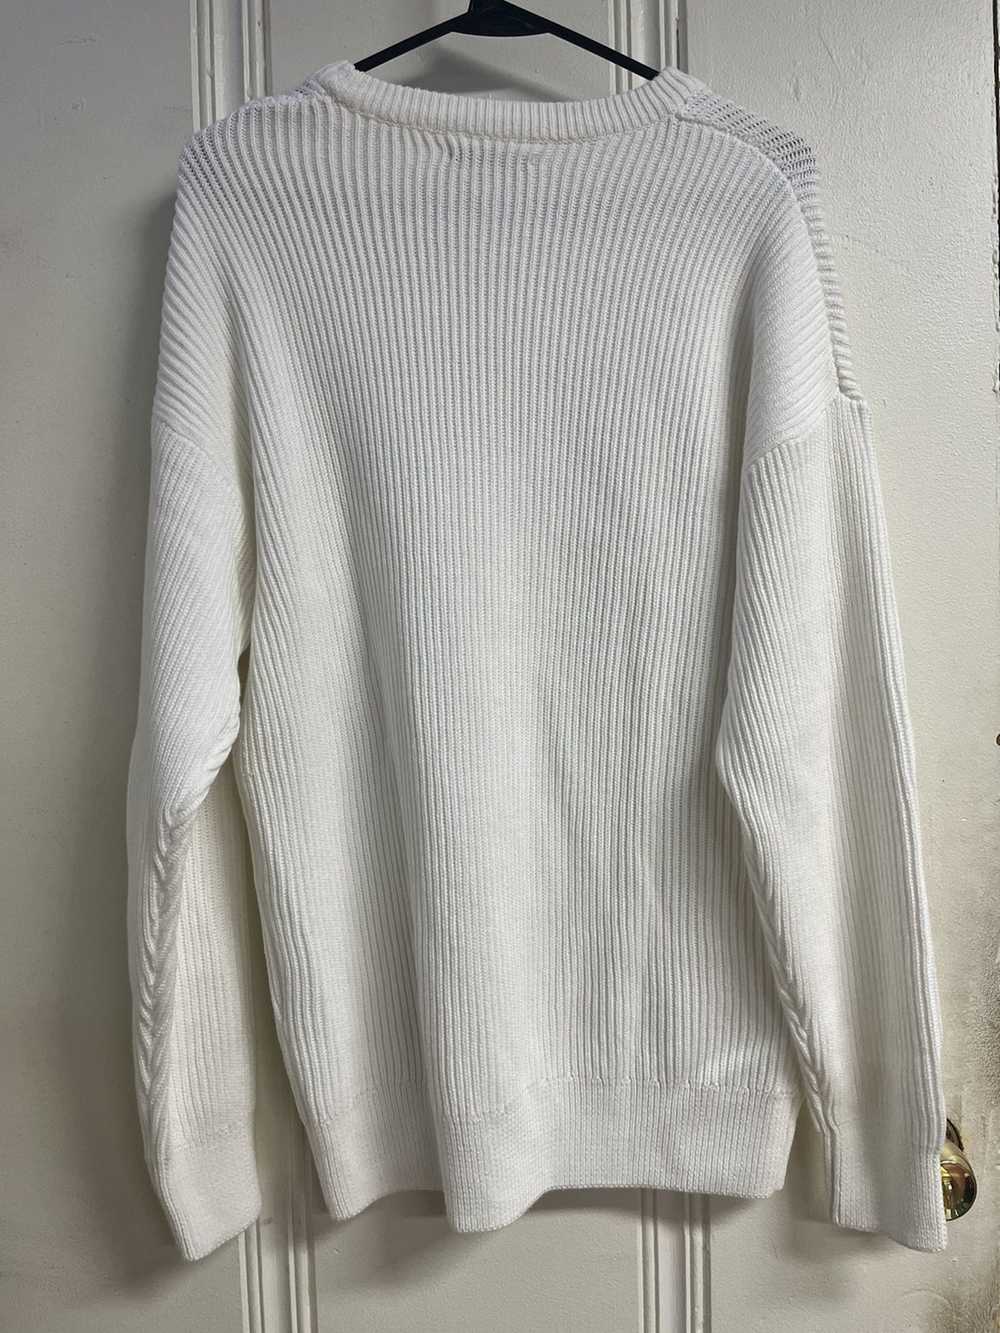 Zara Ribbed Sweater - image 2